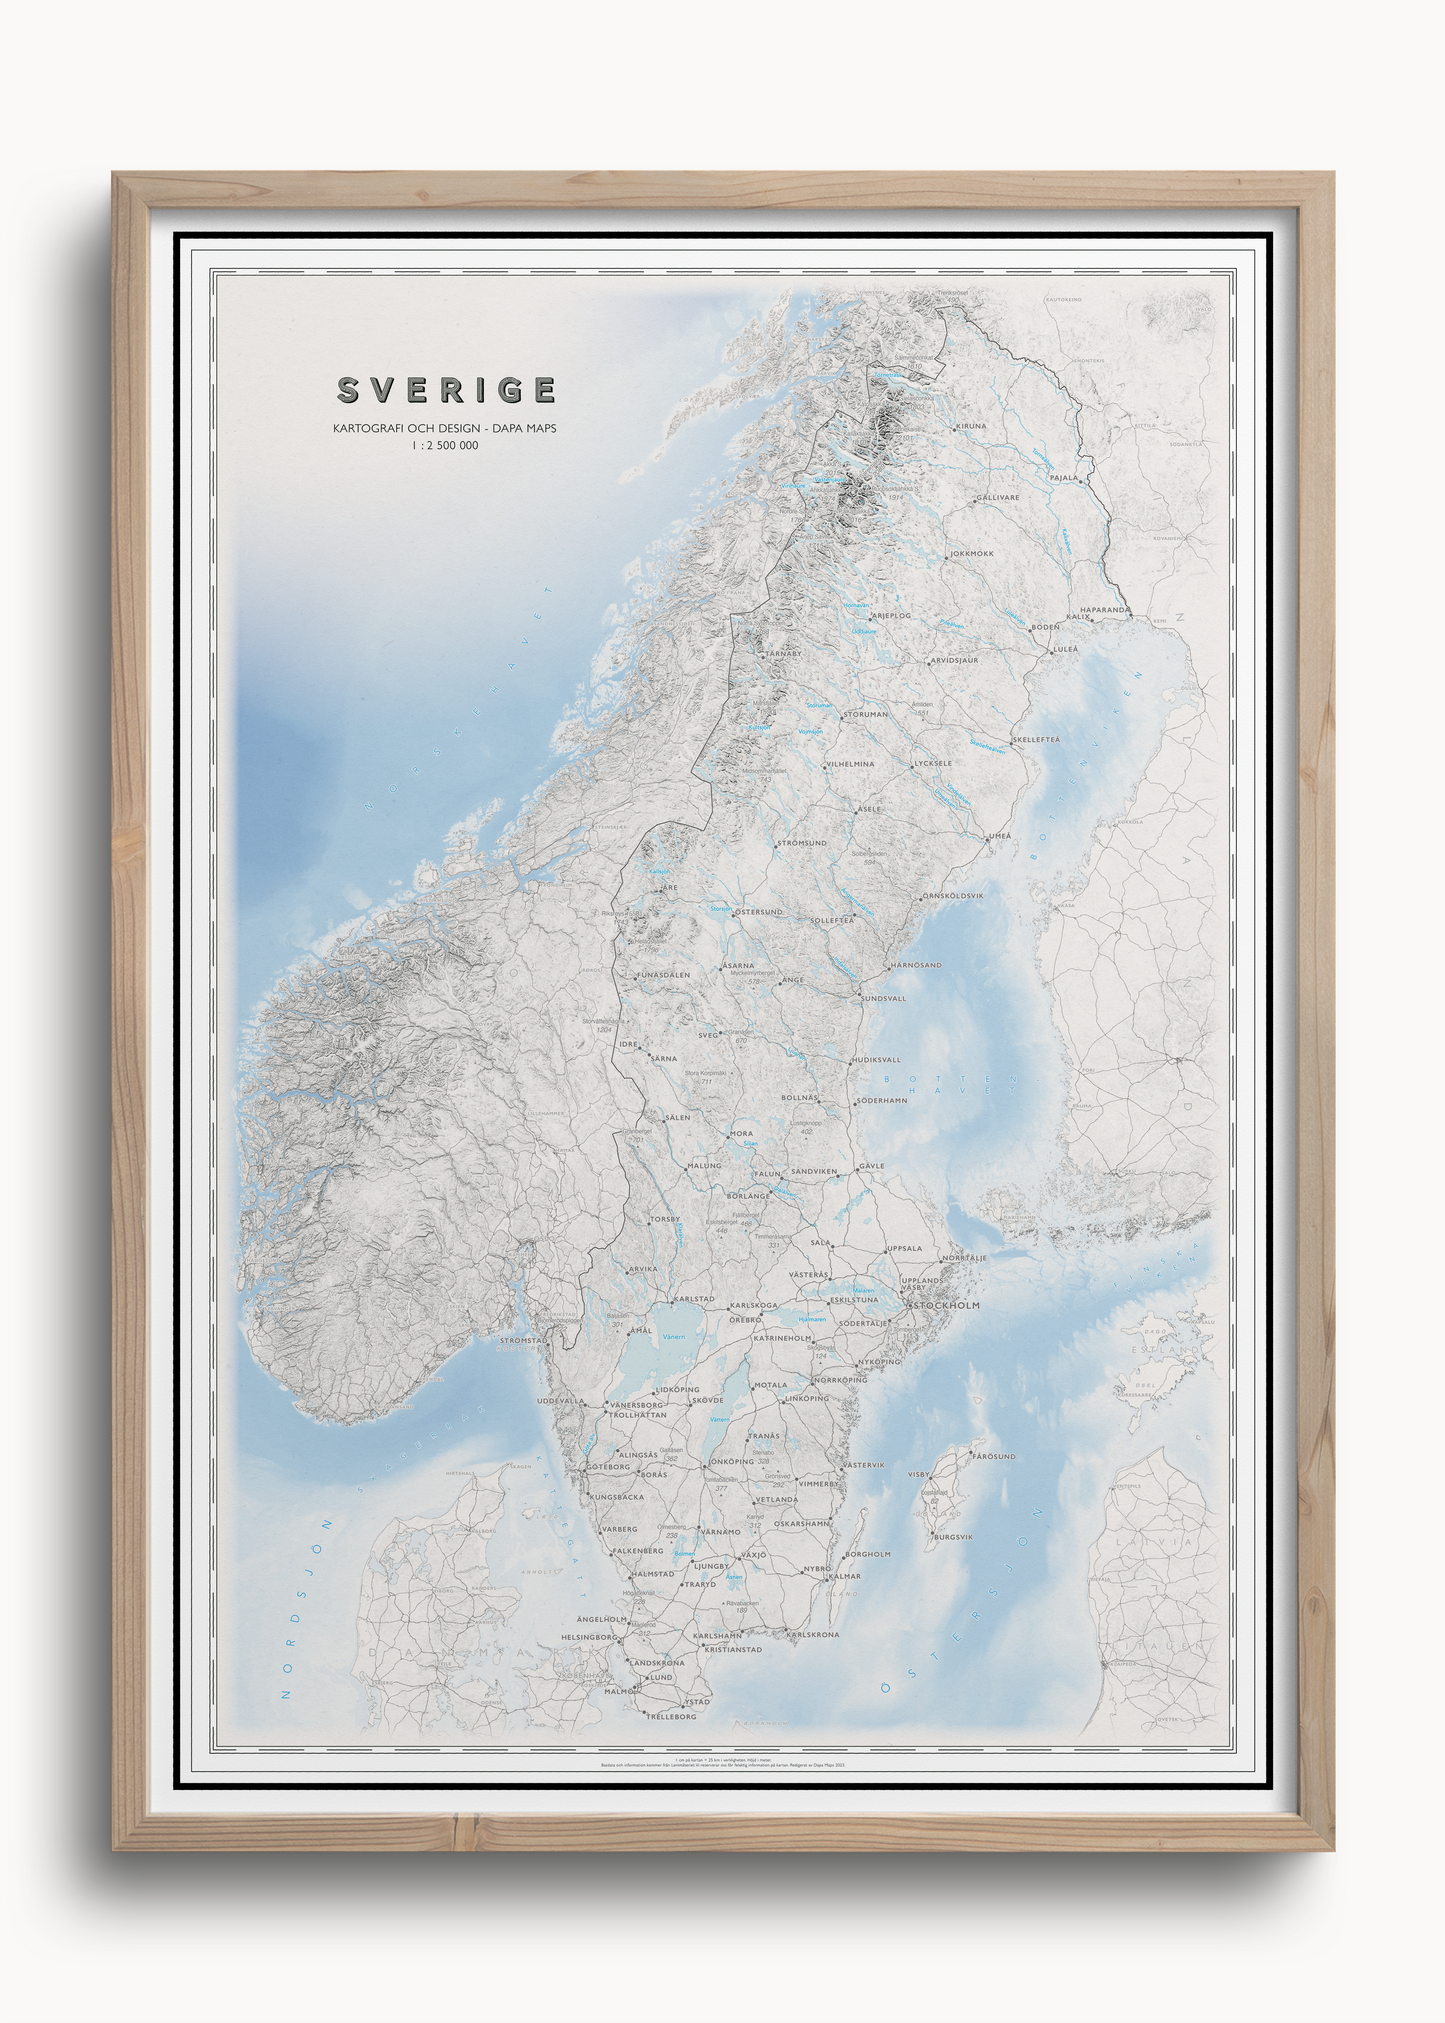 Kart over Sverige